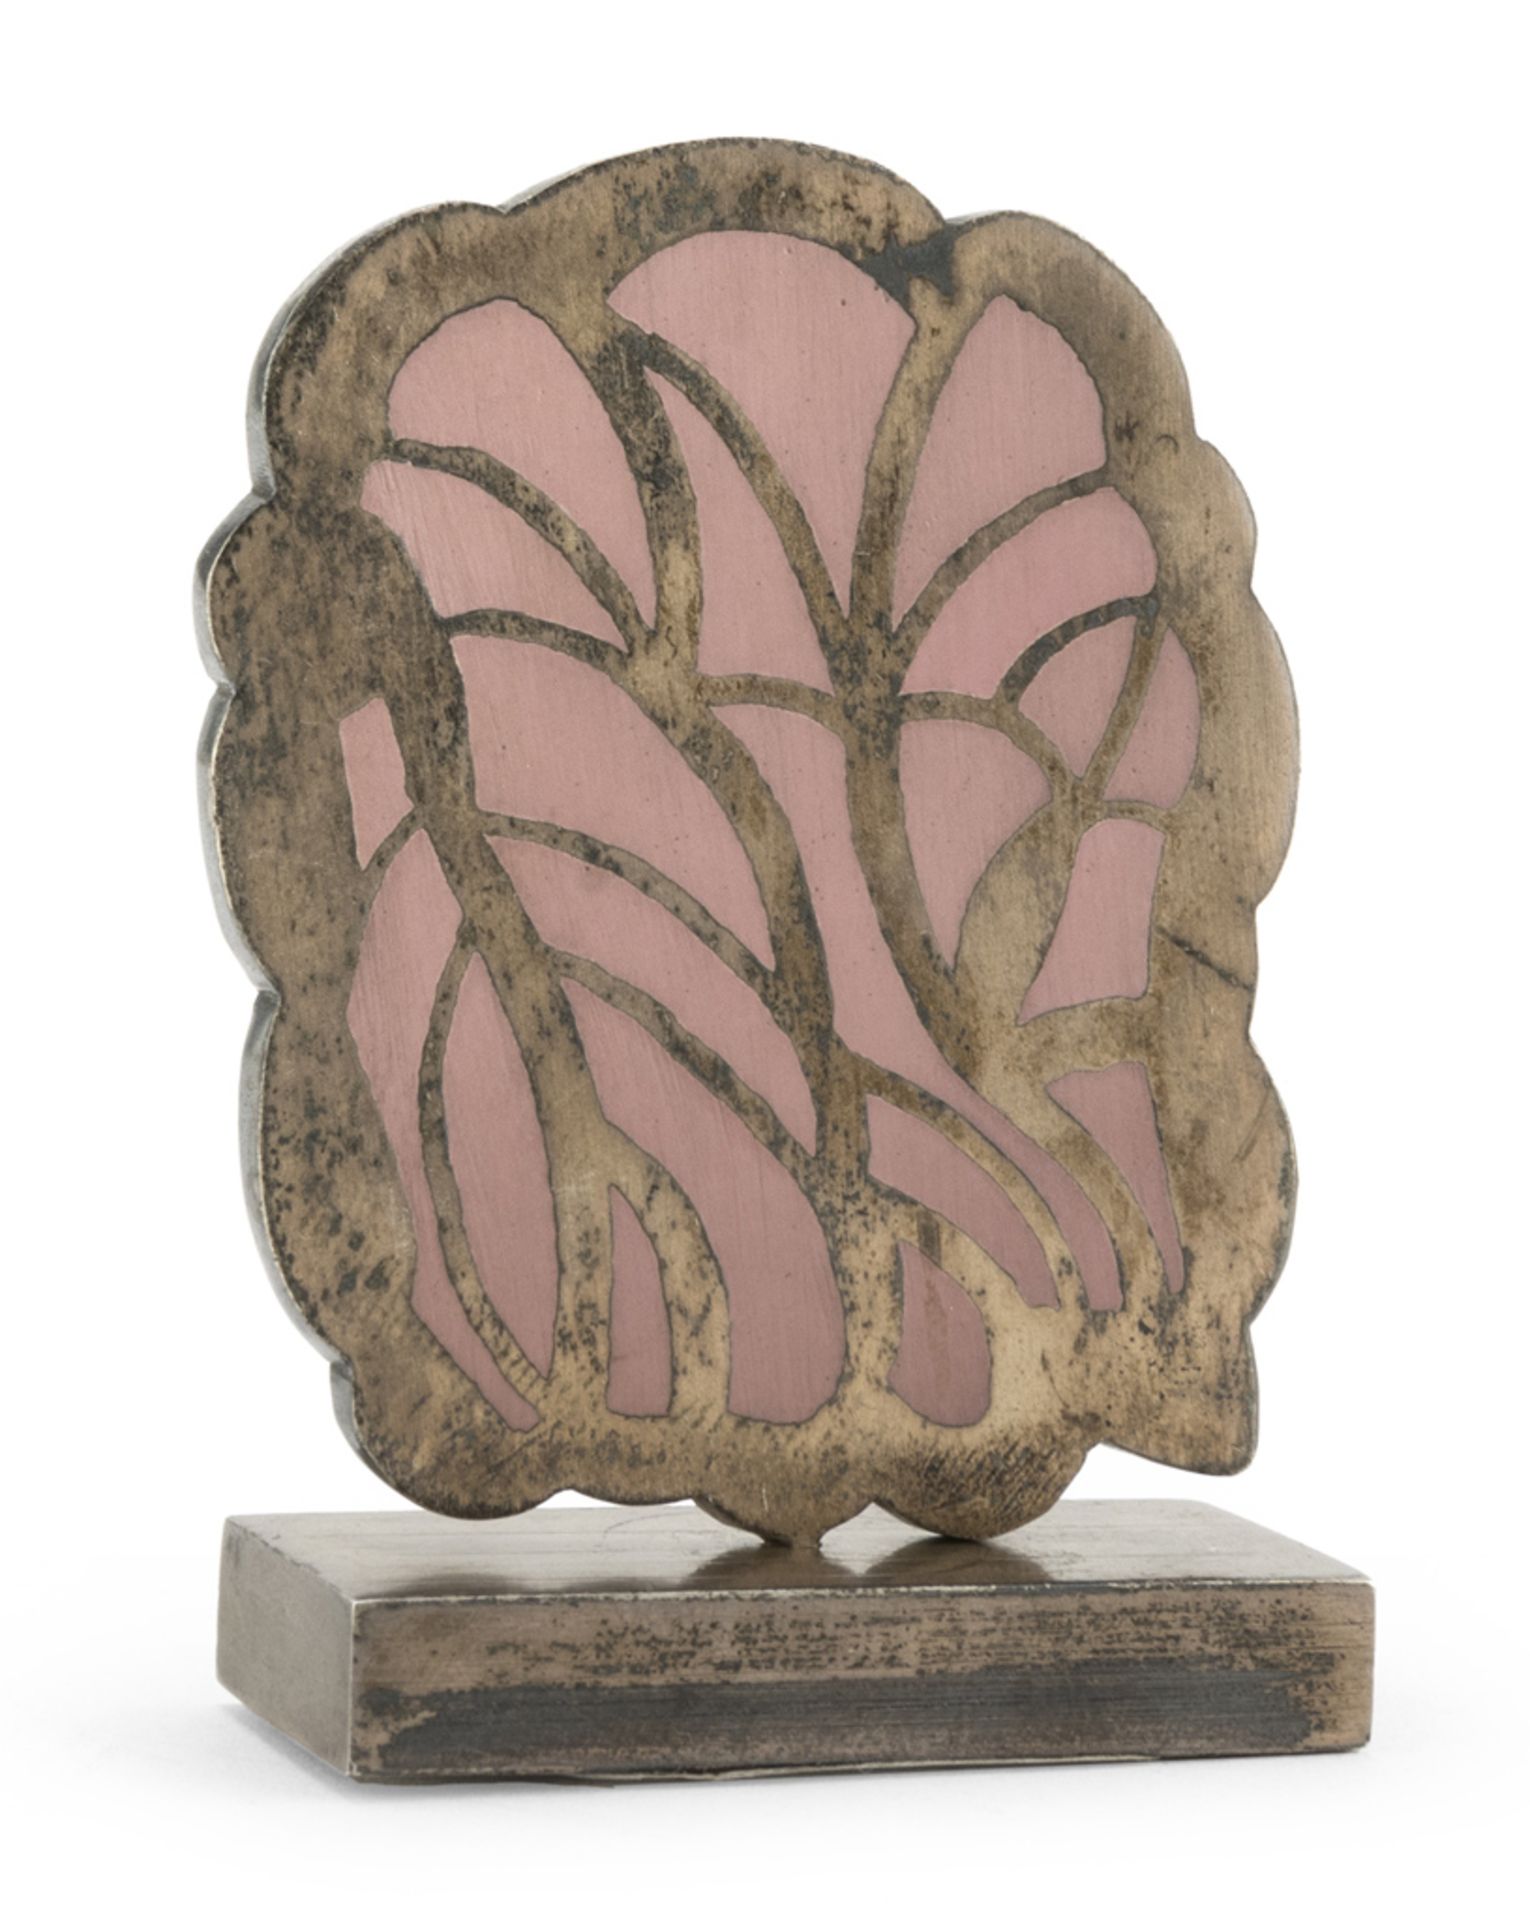 PIETRO CONSAGRA (Mazzara del Vallo 1920) Small façade Bronze sculpture in pink enamel, ex. /9